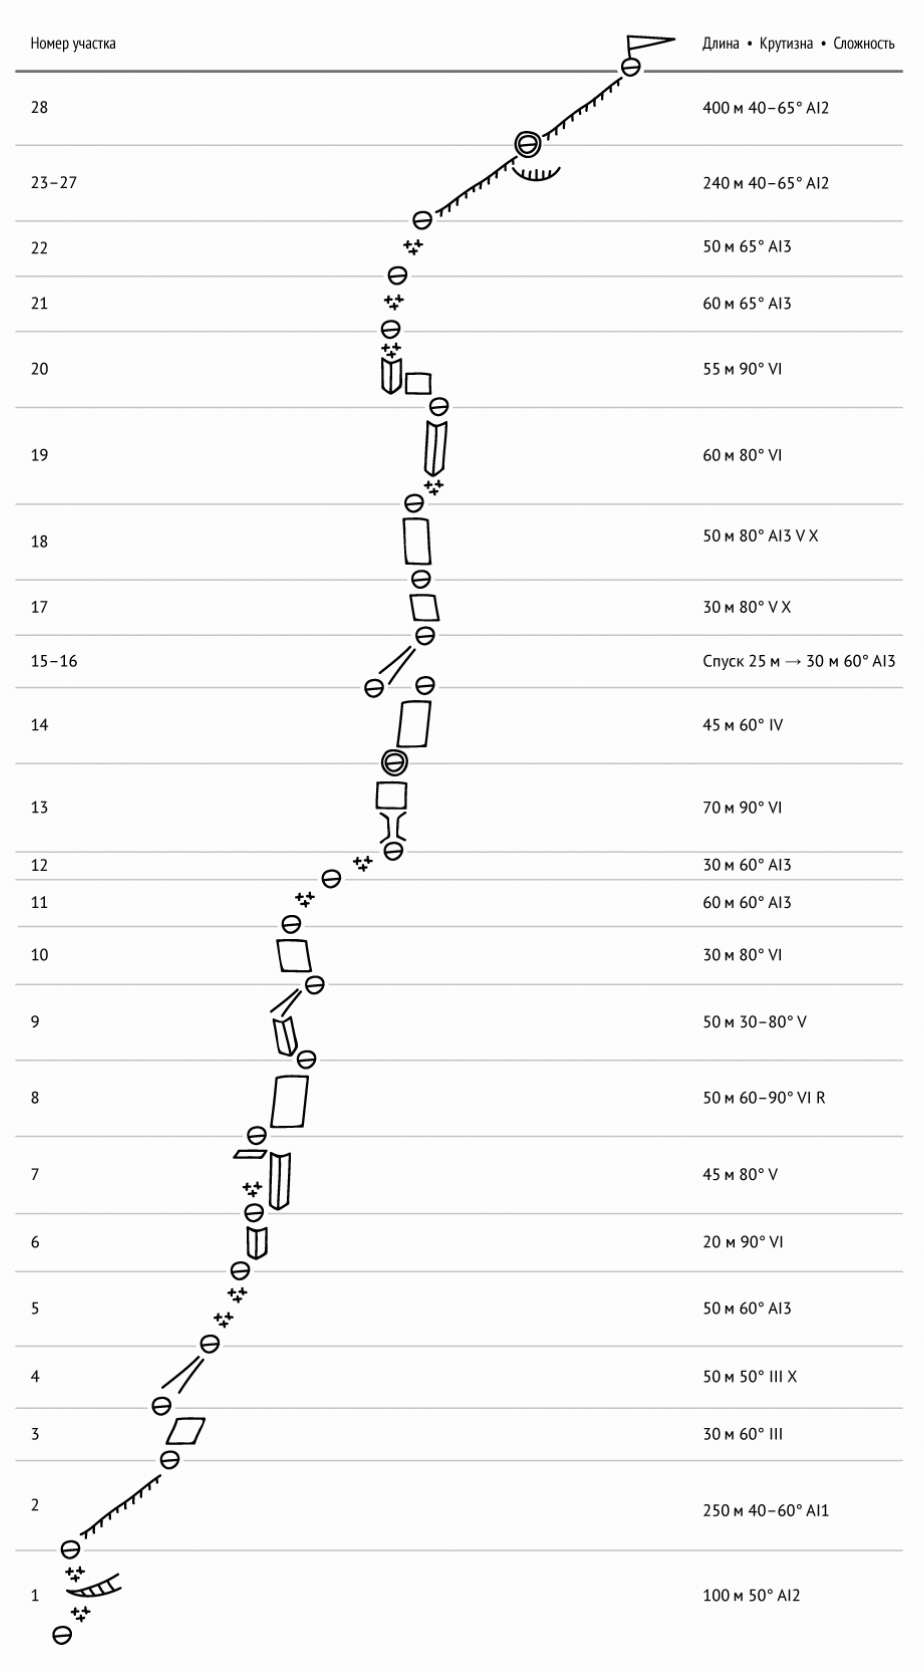 Схема маршрута в символах УИАА